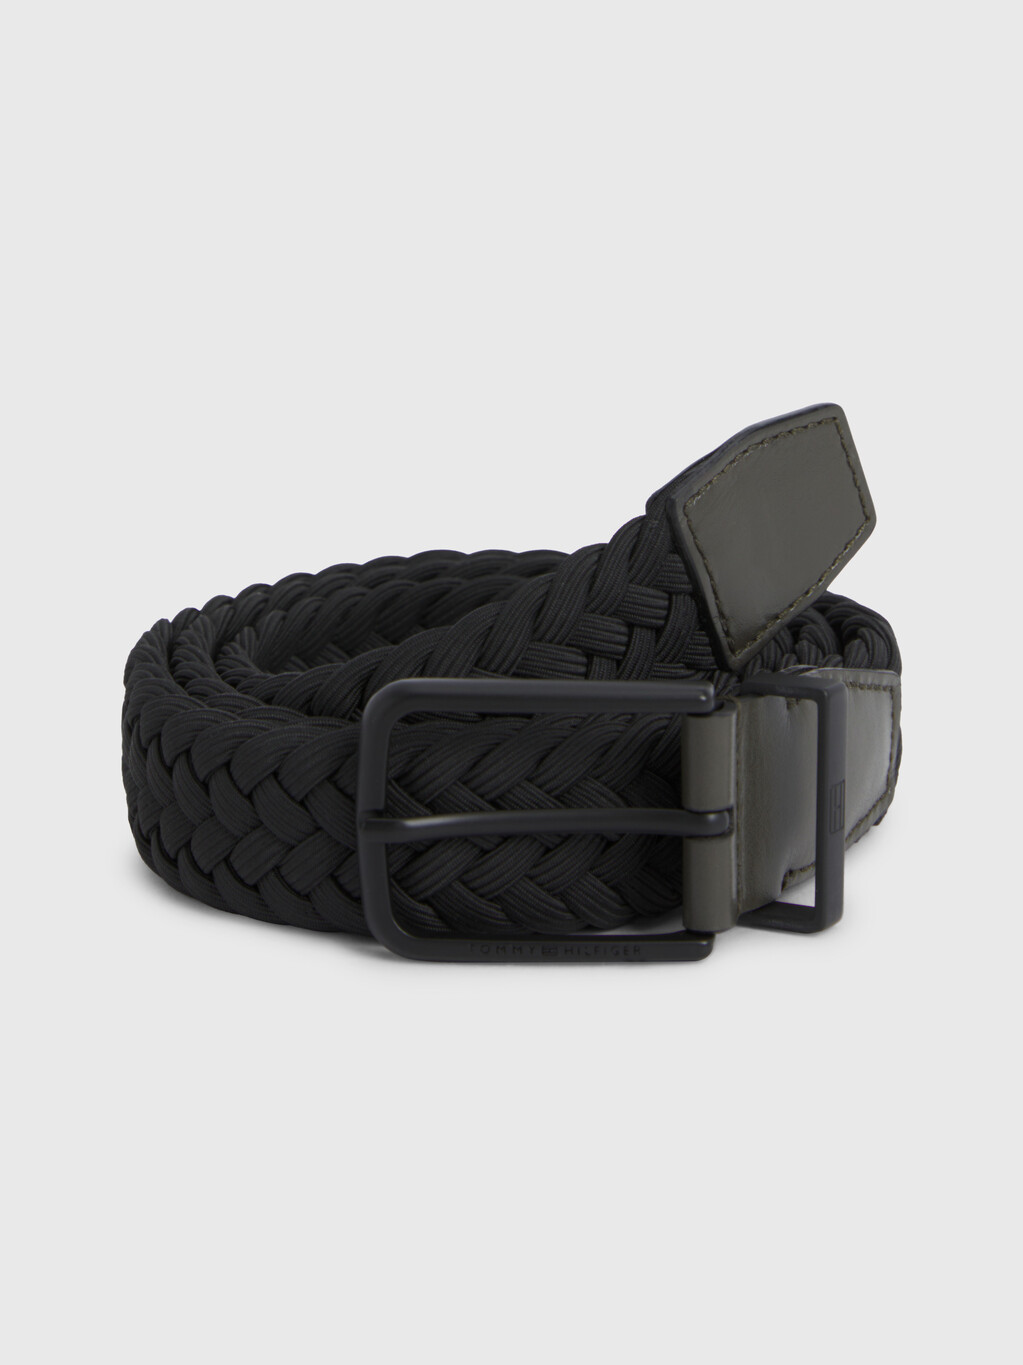 TH Tech Braided Elastic Belt, Black, hi-res